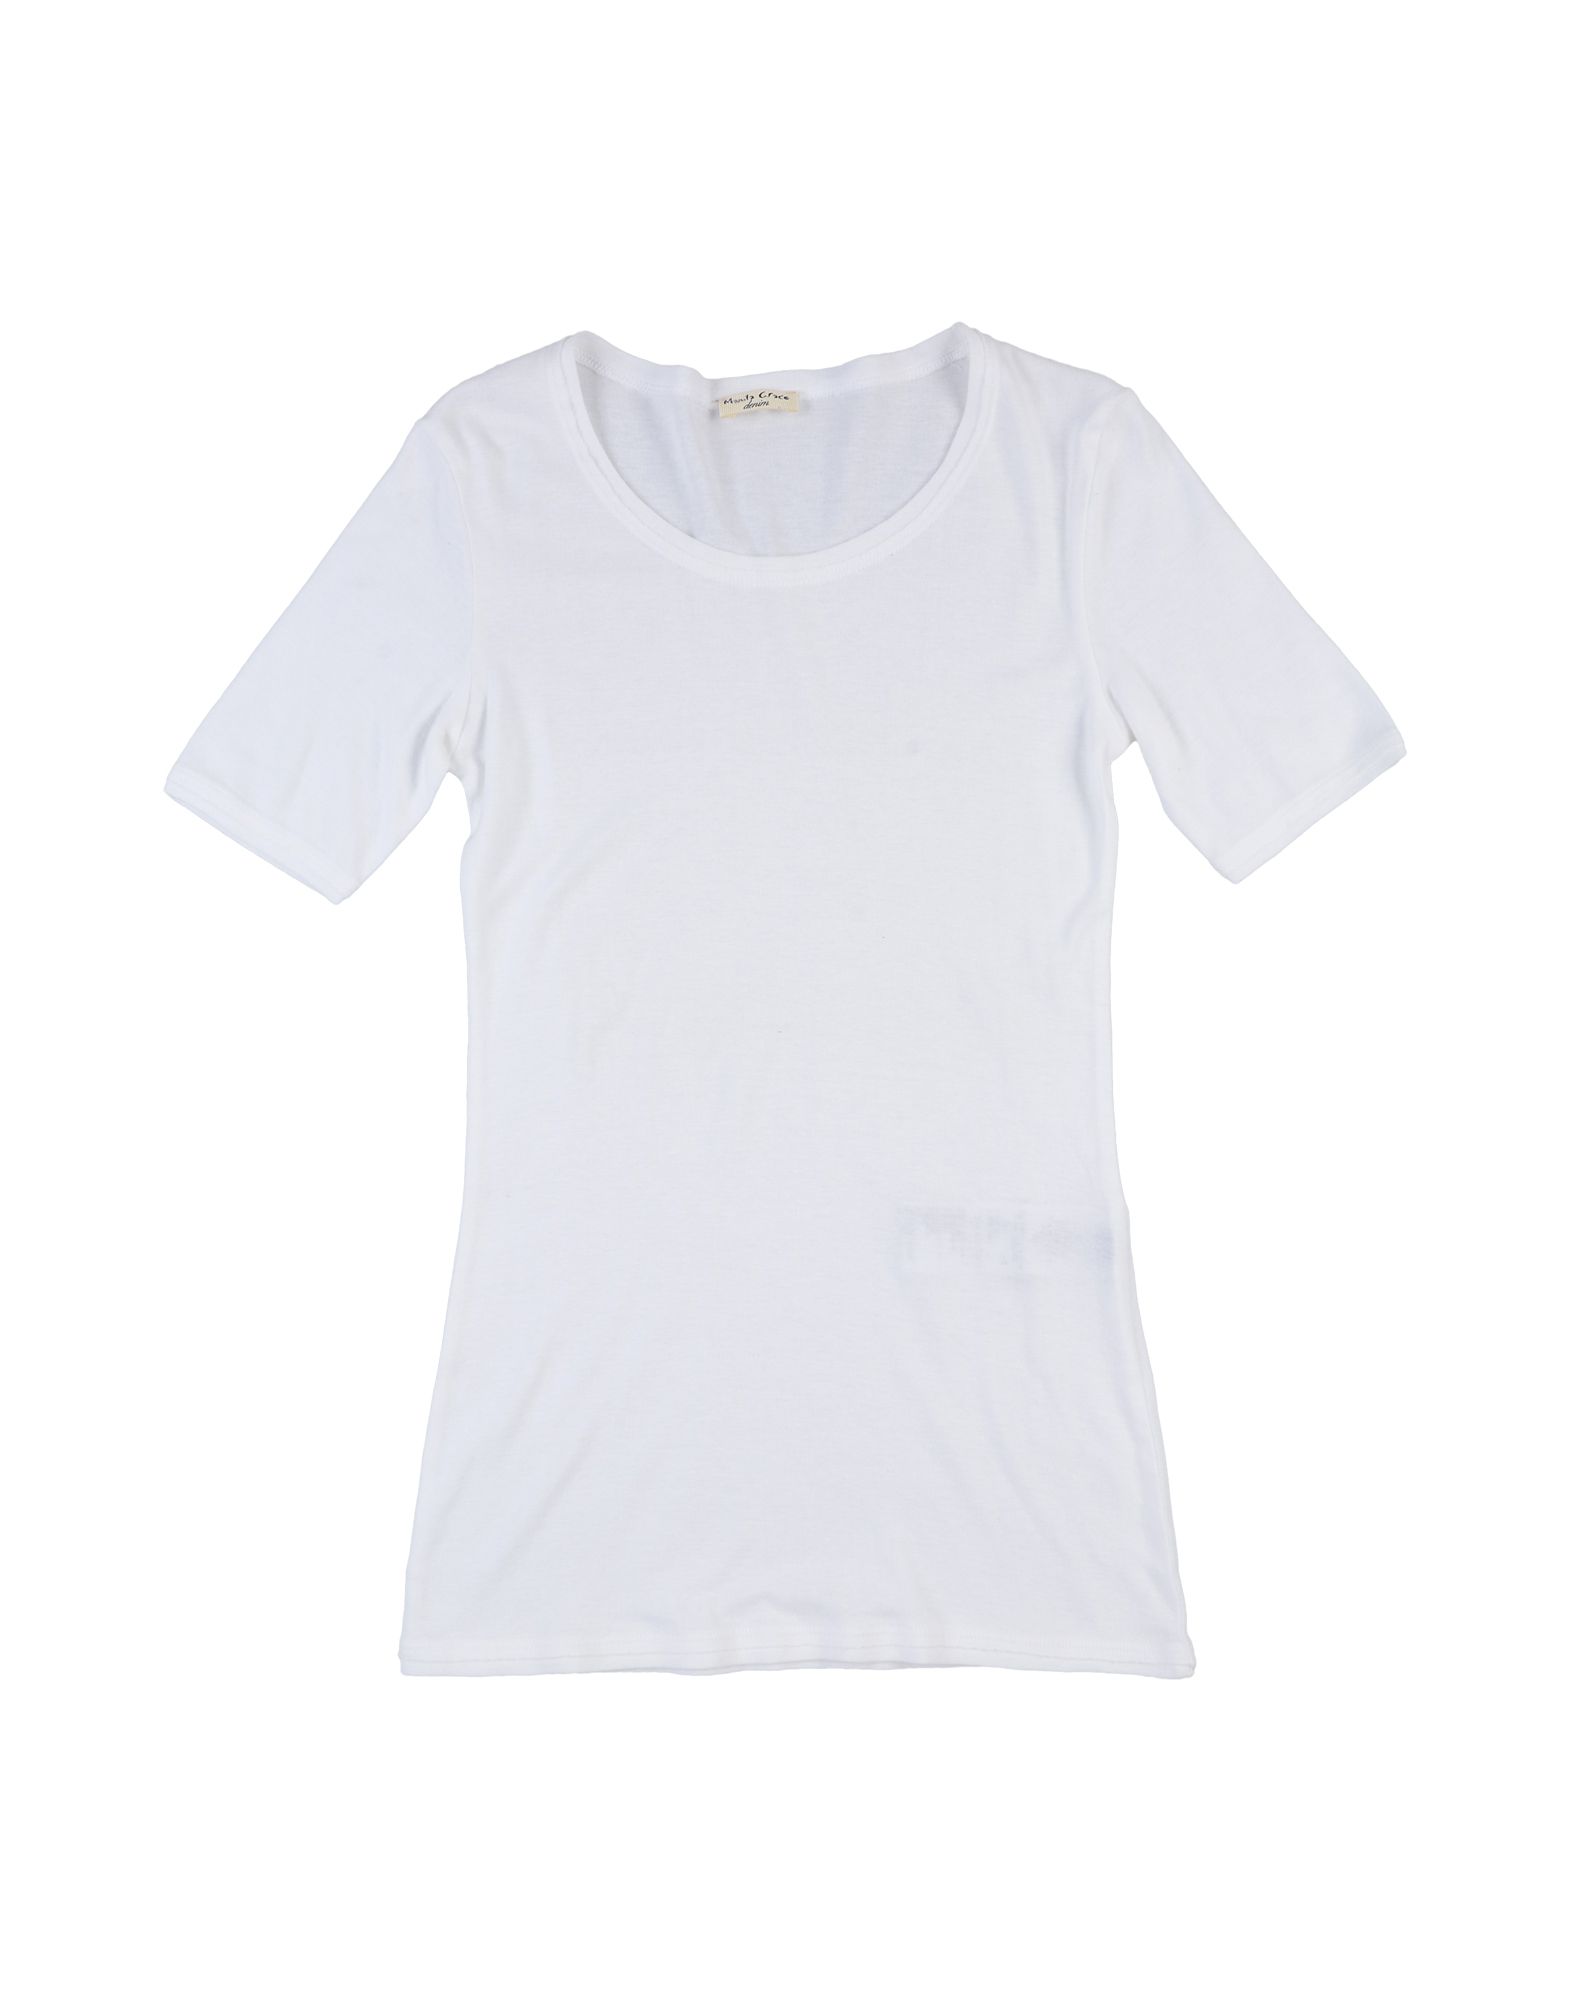 Manila Grace Denim Kids' T-shirts In White